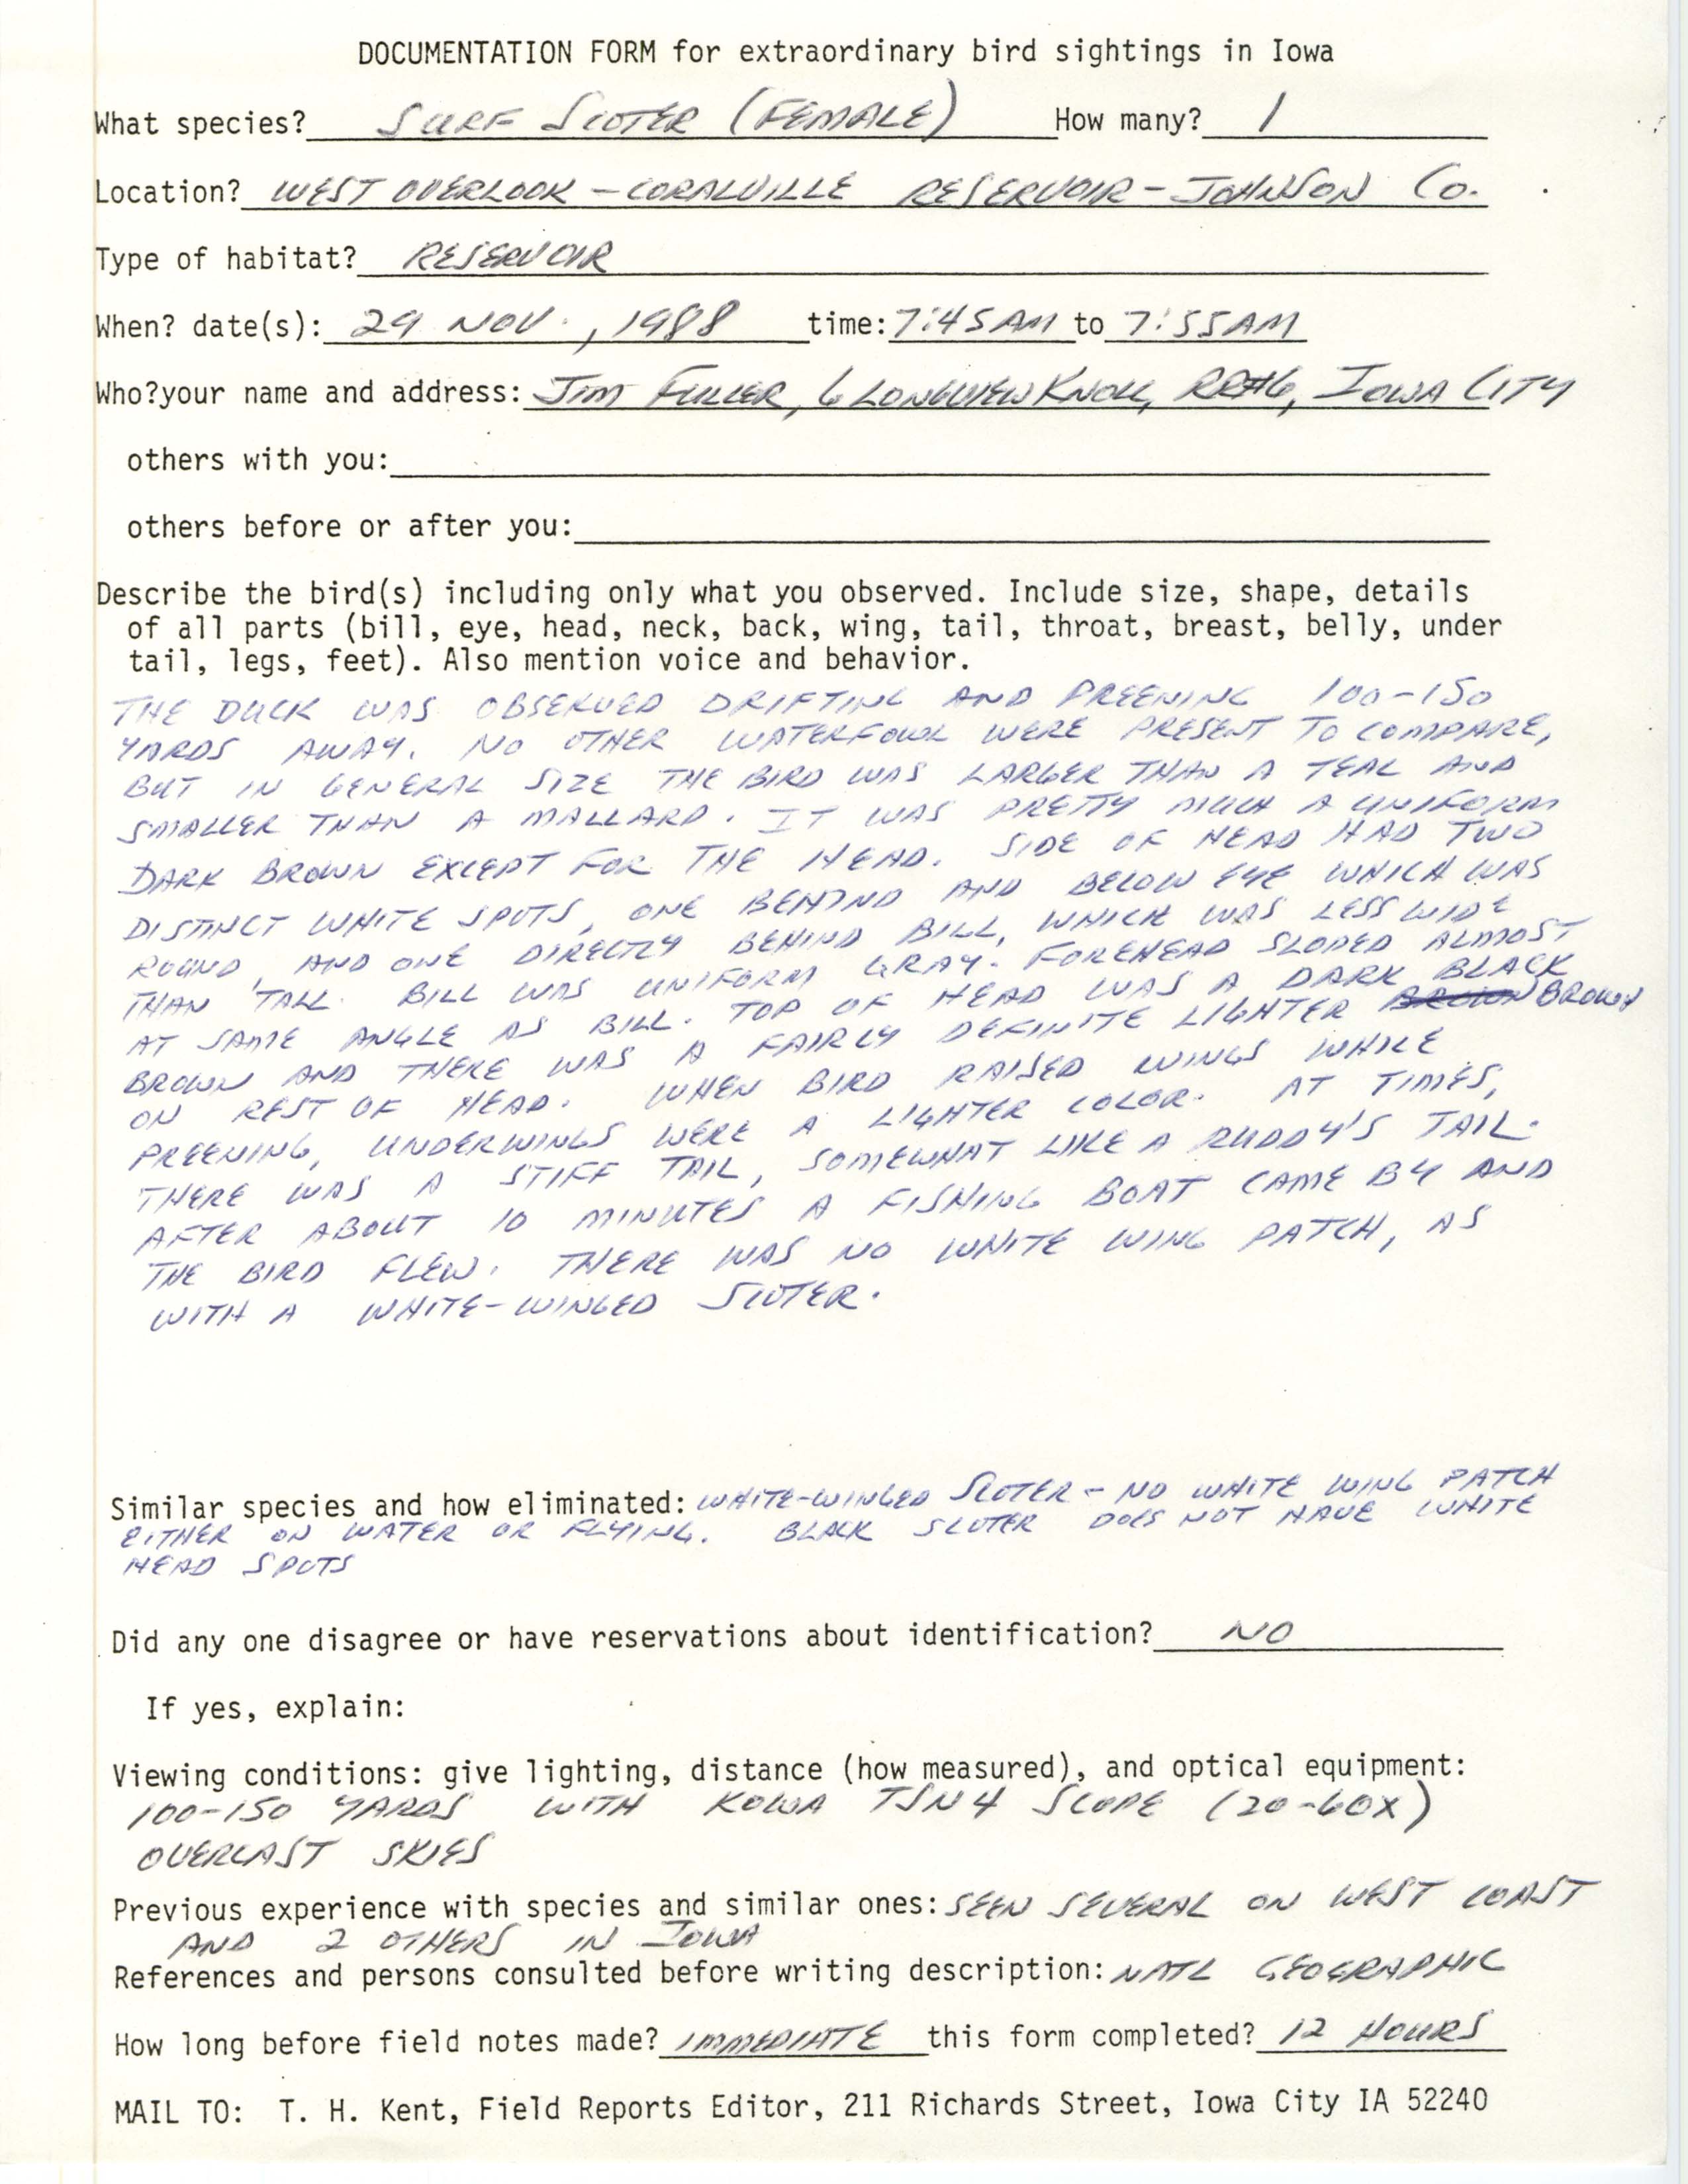 Rare bird documentation form for Surf Scoter at West Overlook at Coralville Reservoir, 1988